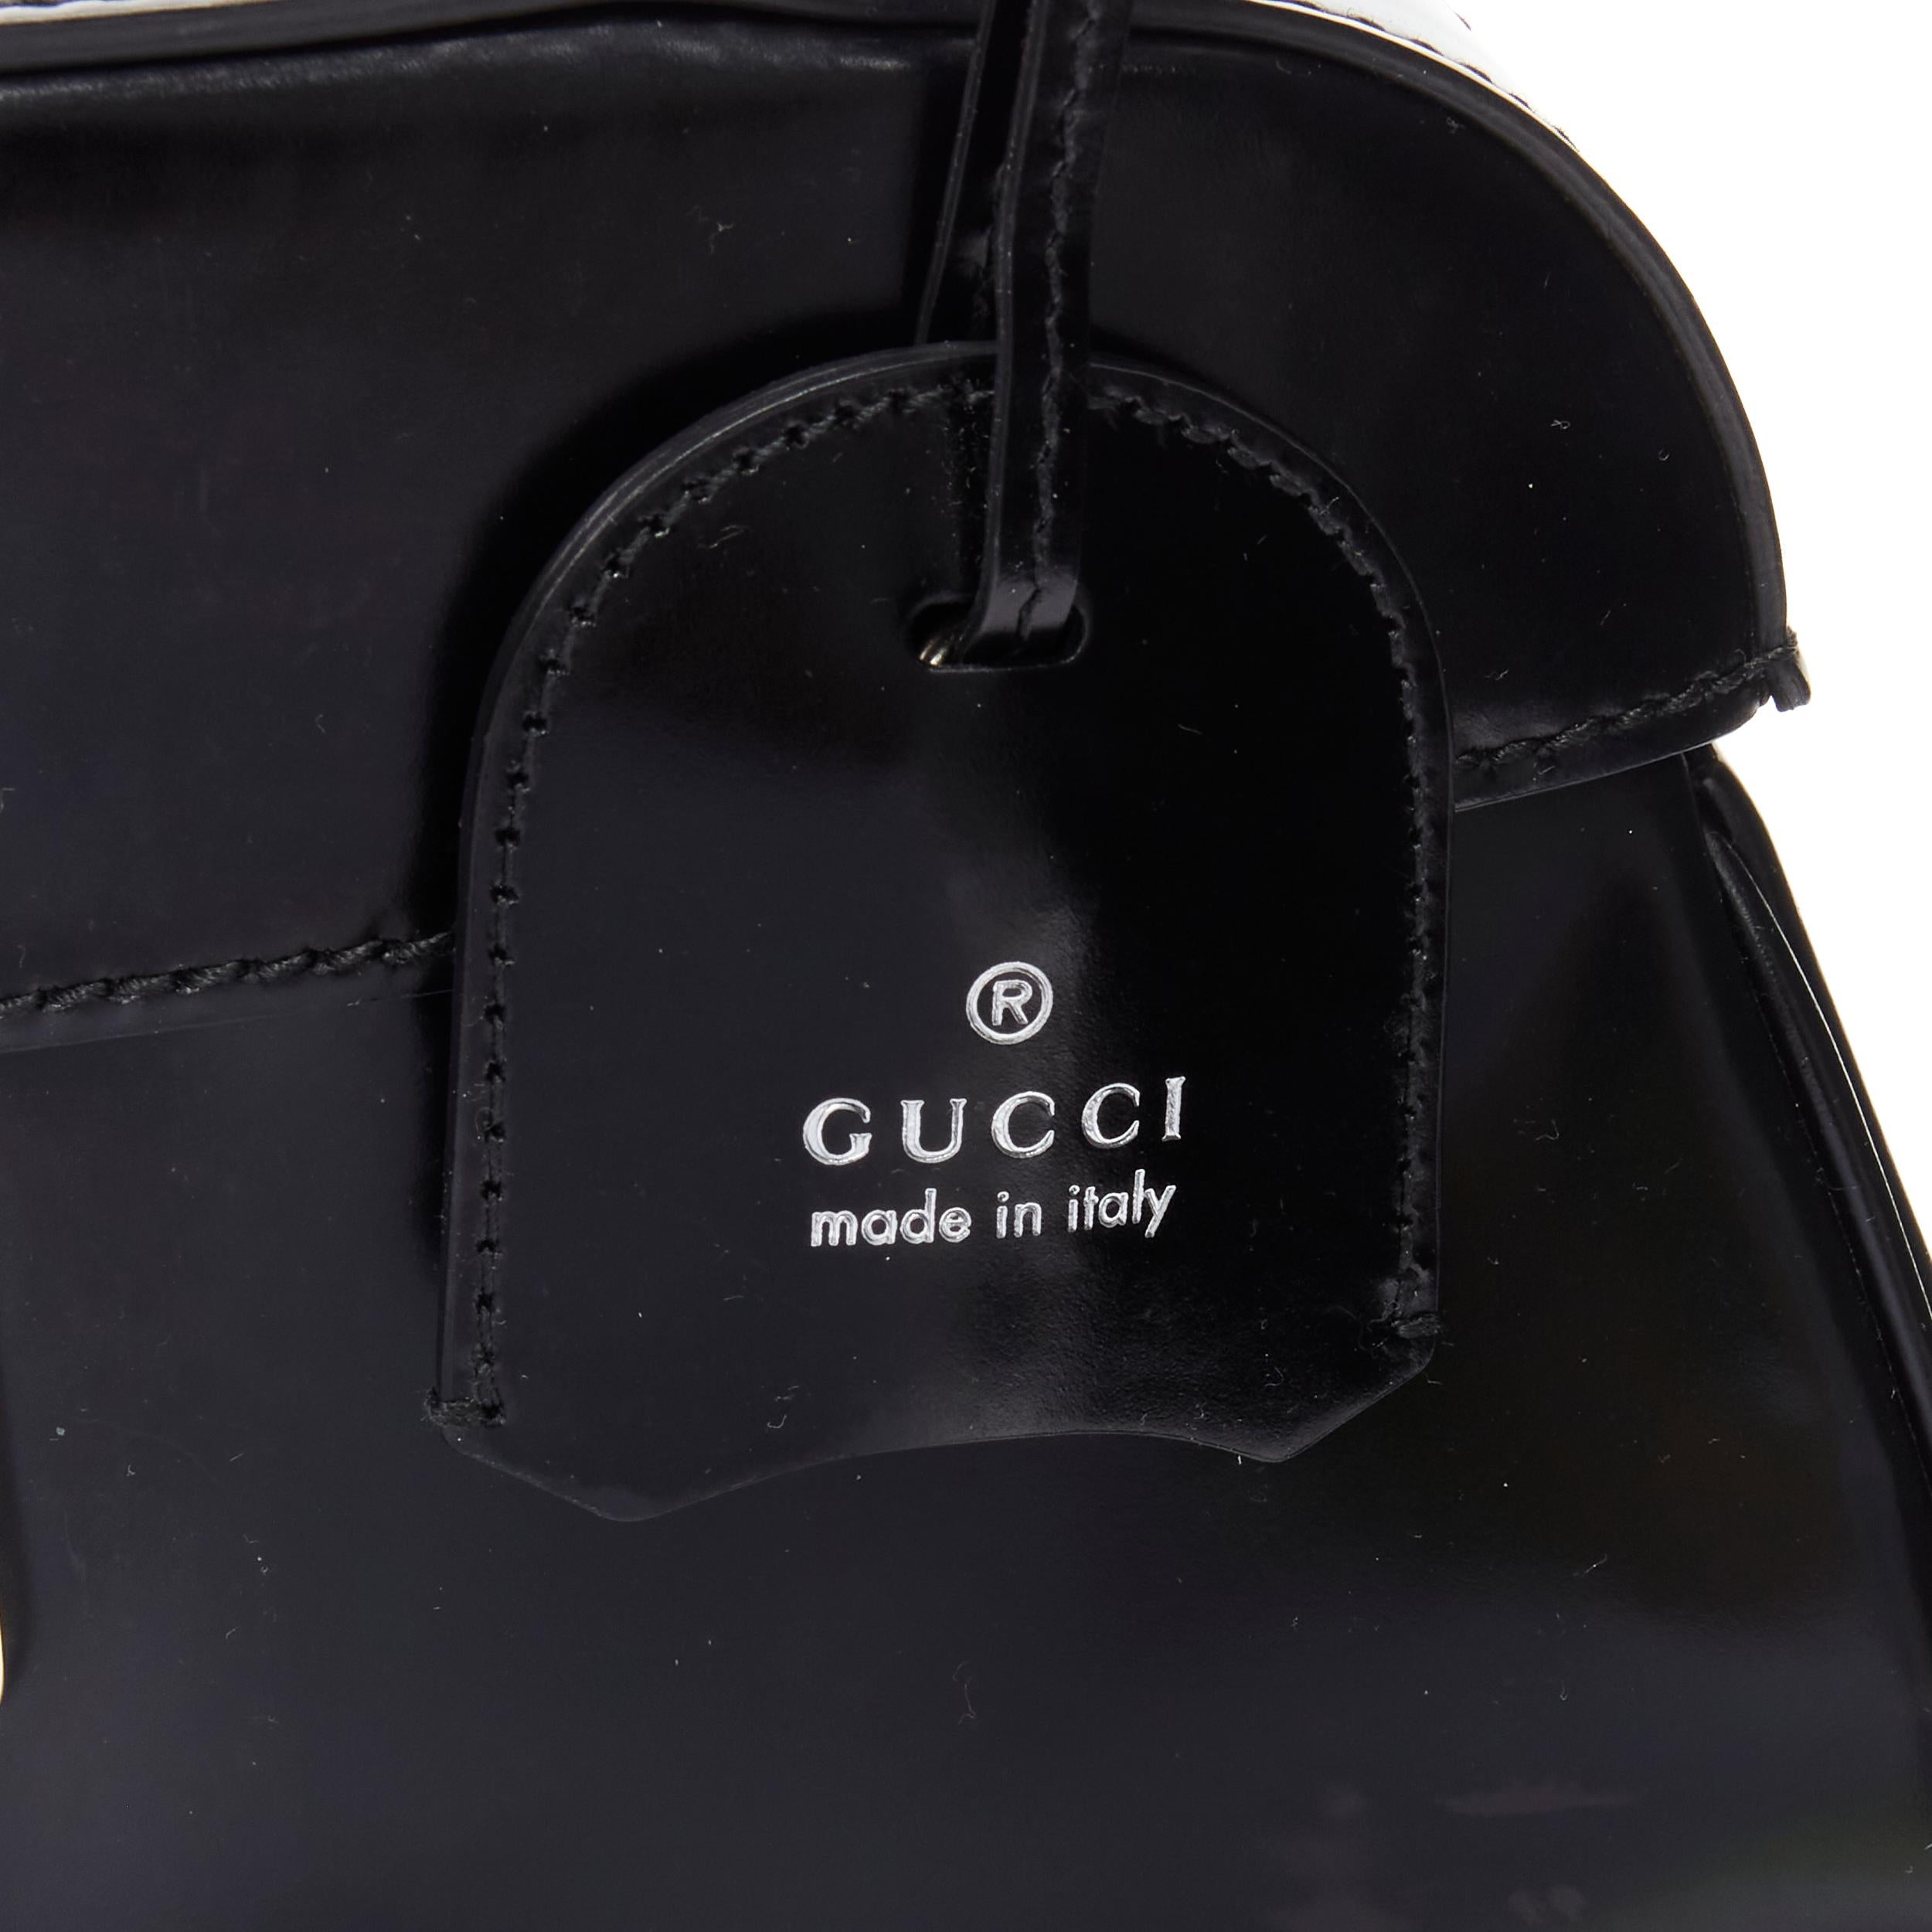 GUCCI Lady Lock black smooth leather Bamboo handle lock satchel bag 1